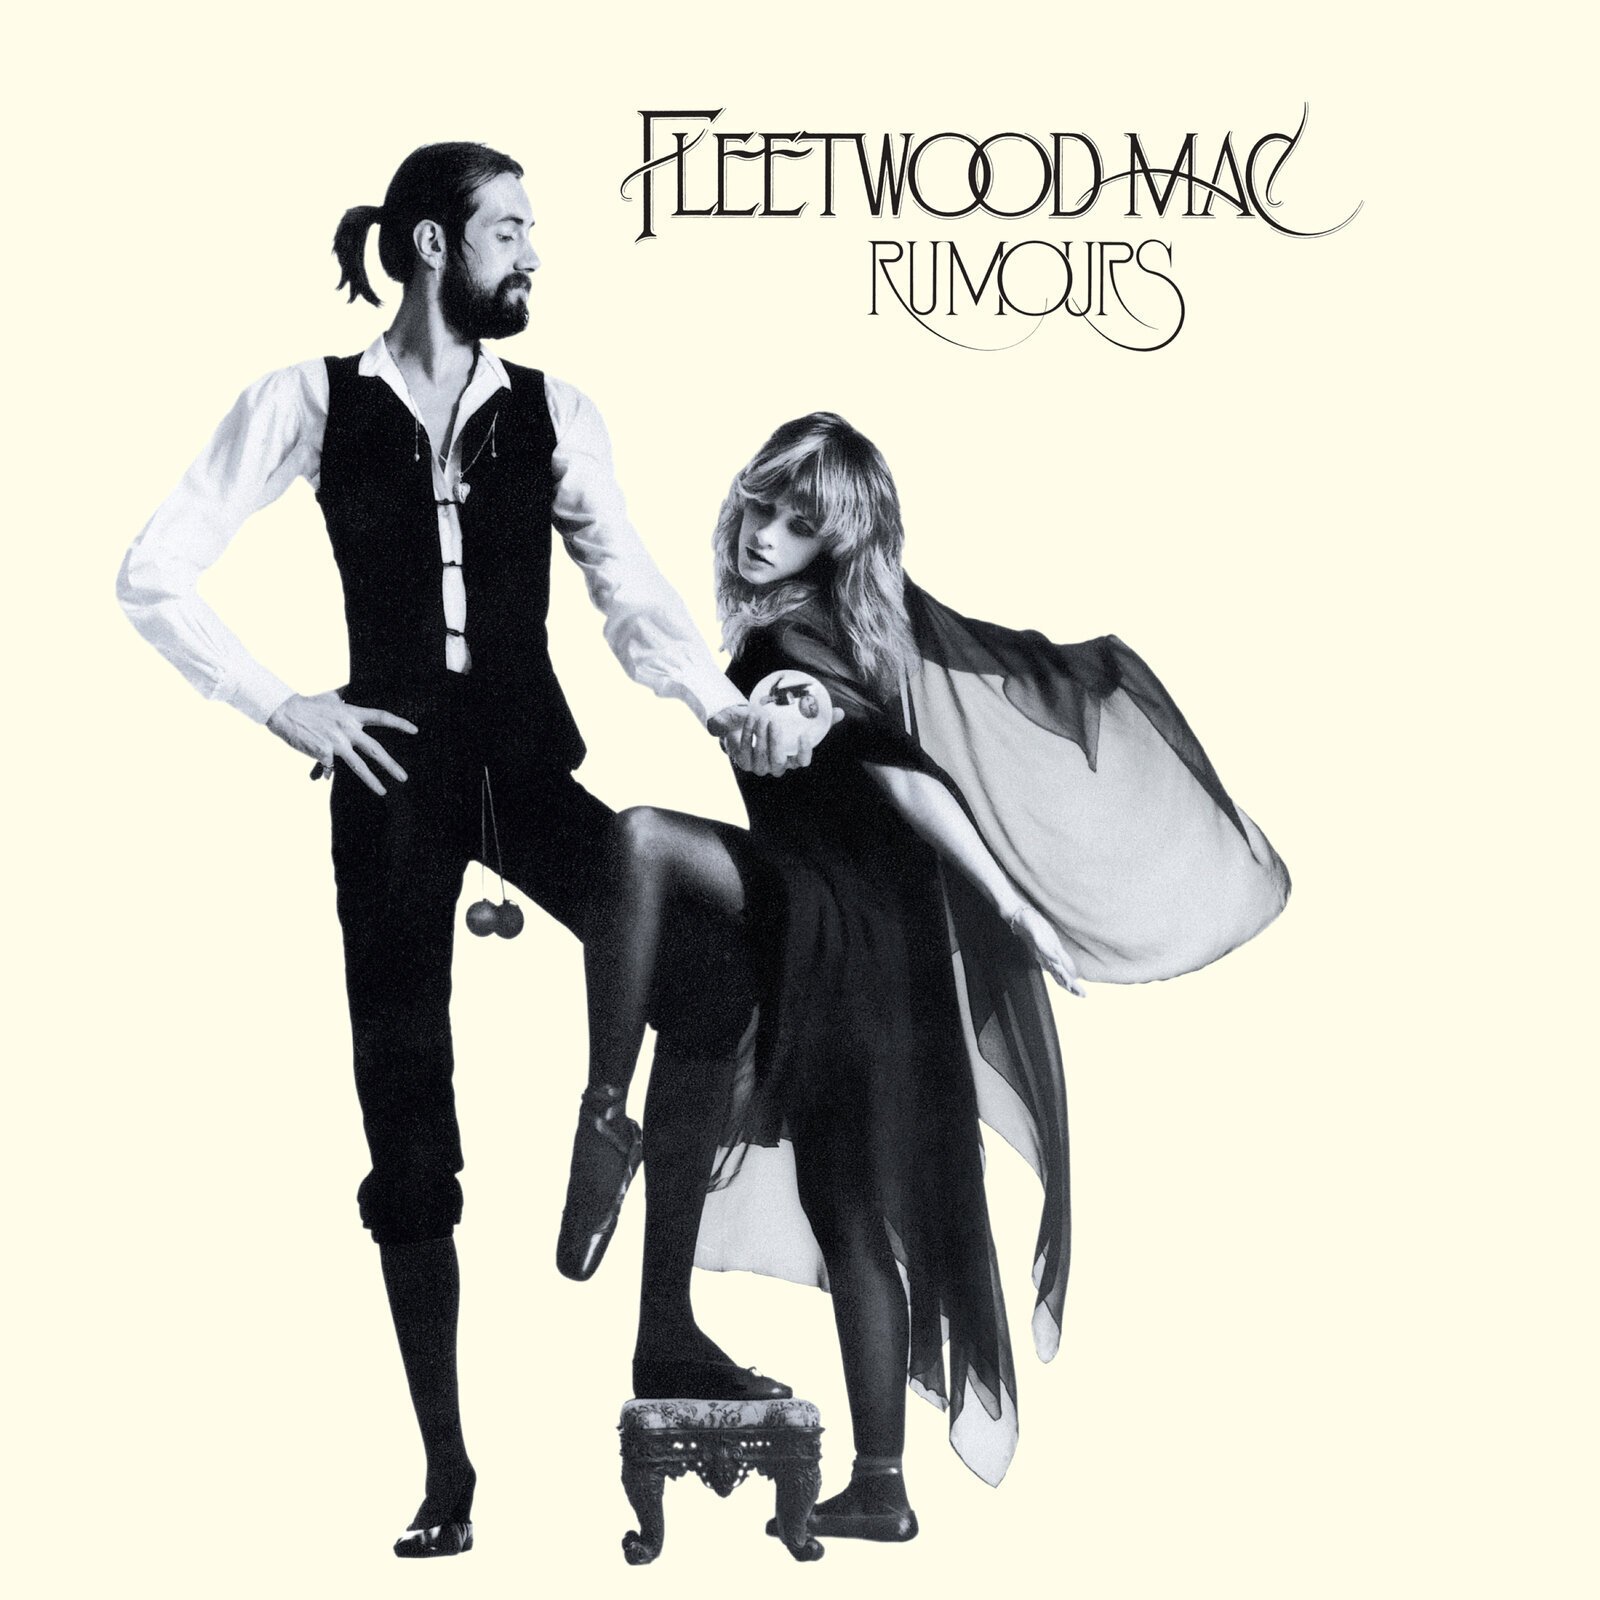 Fleetwood Mac - Rumours (Limited Editon) (Light Blue Coloured) (LP)